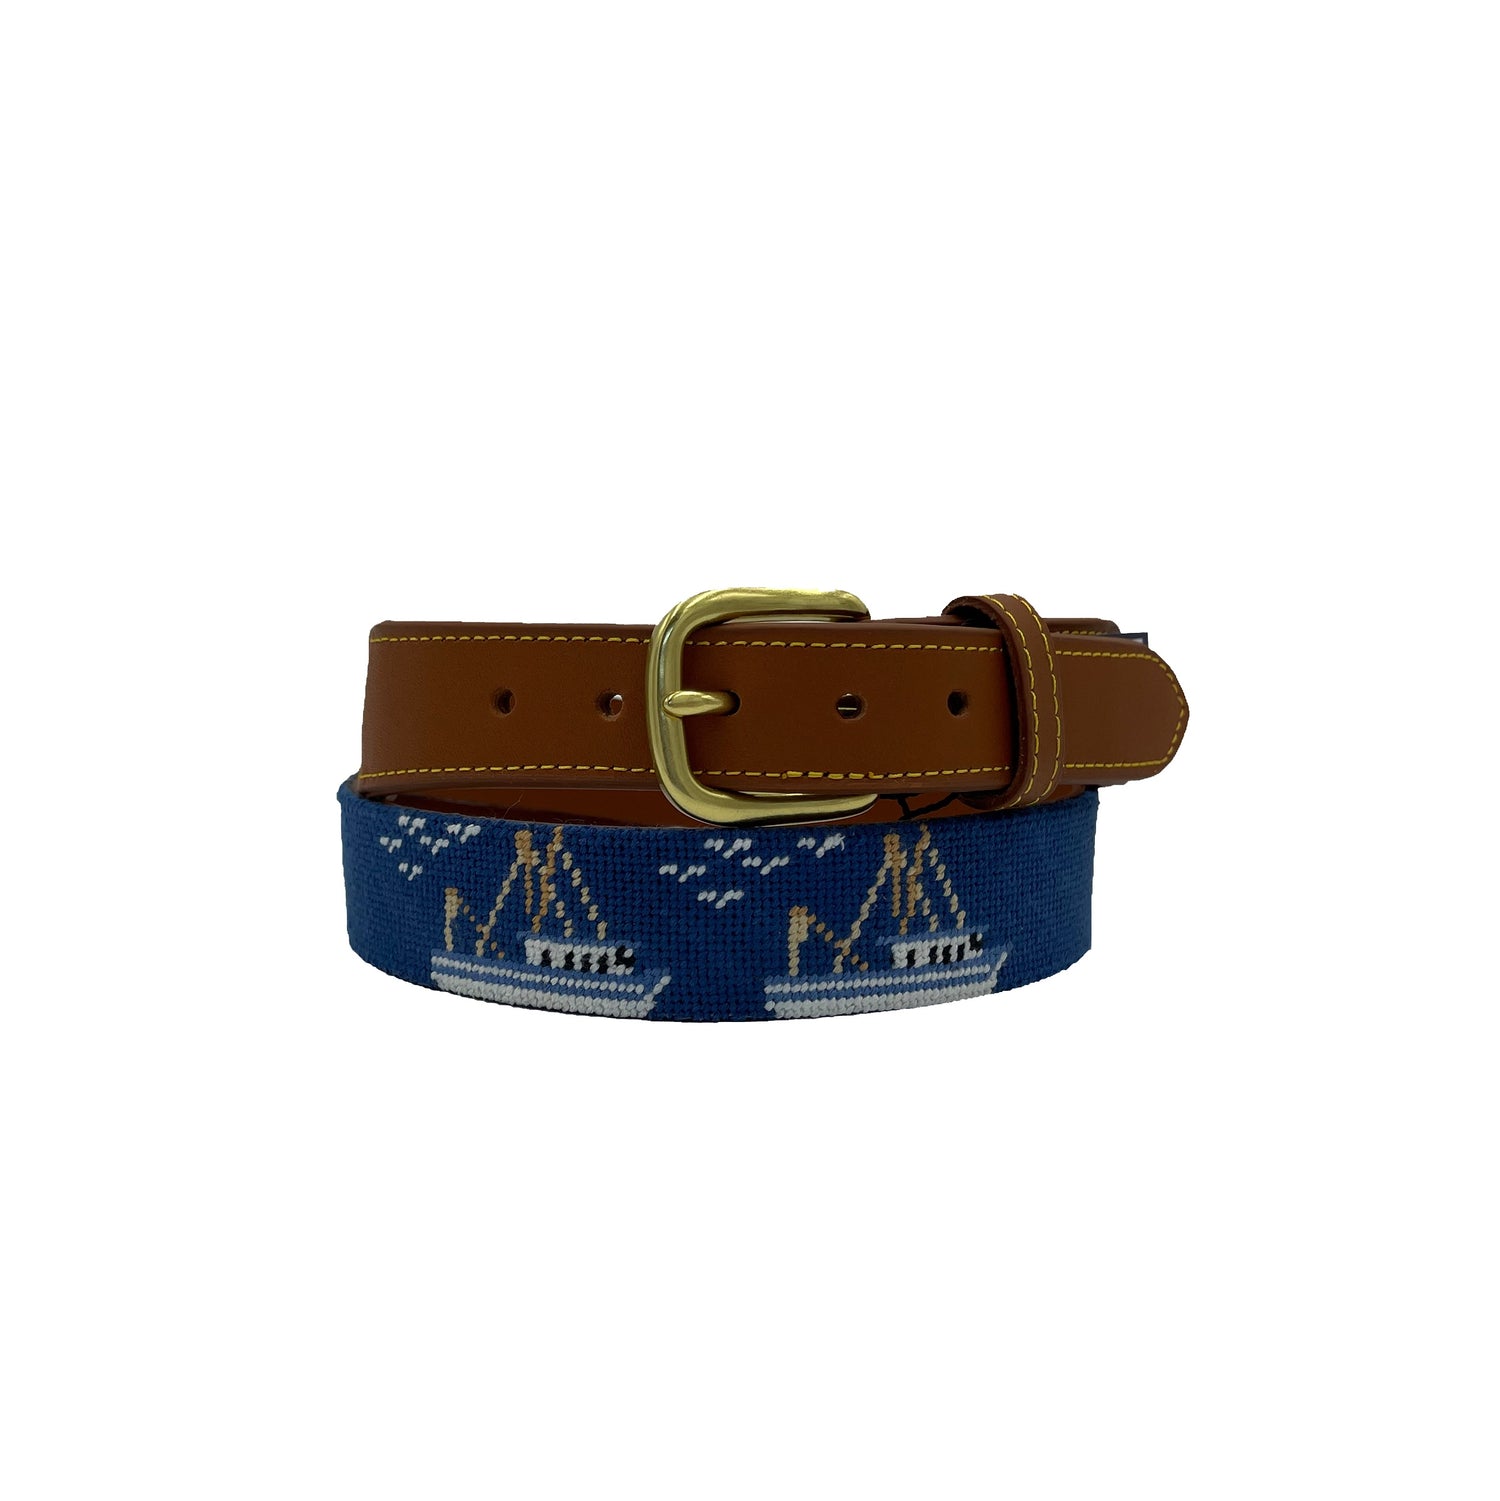 Louis Vuitton Original Belt Price 8840